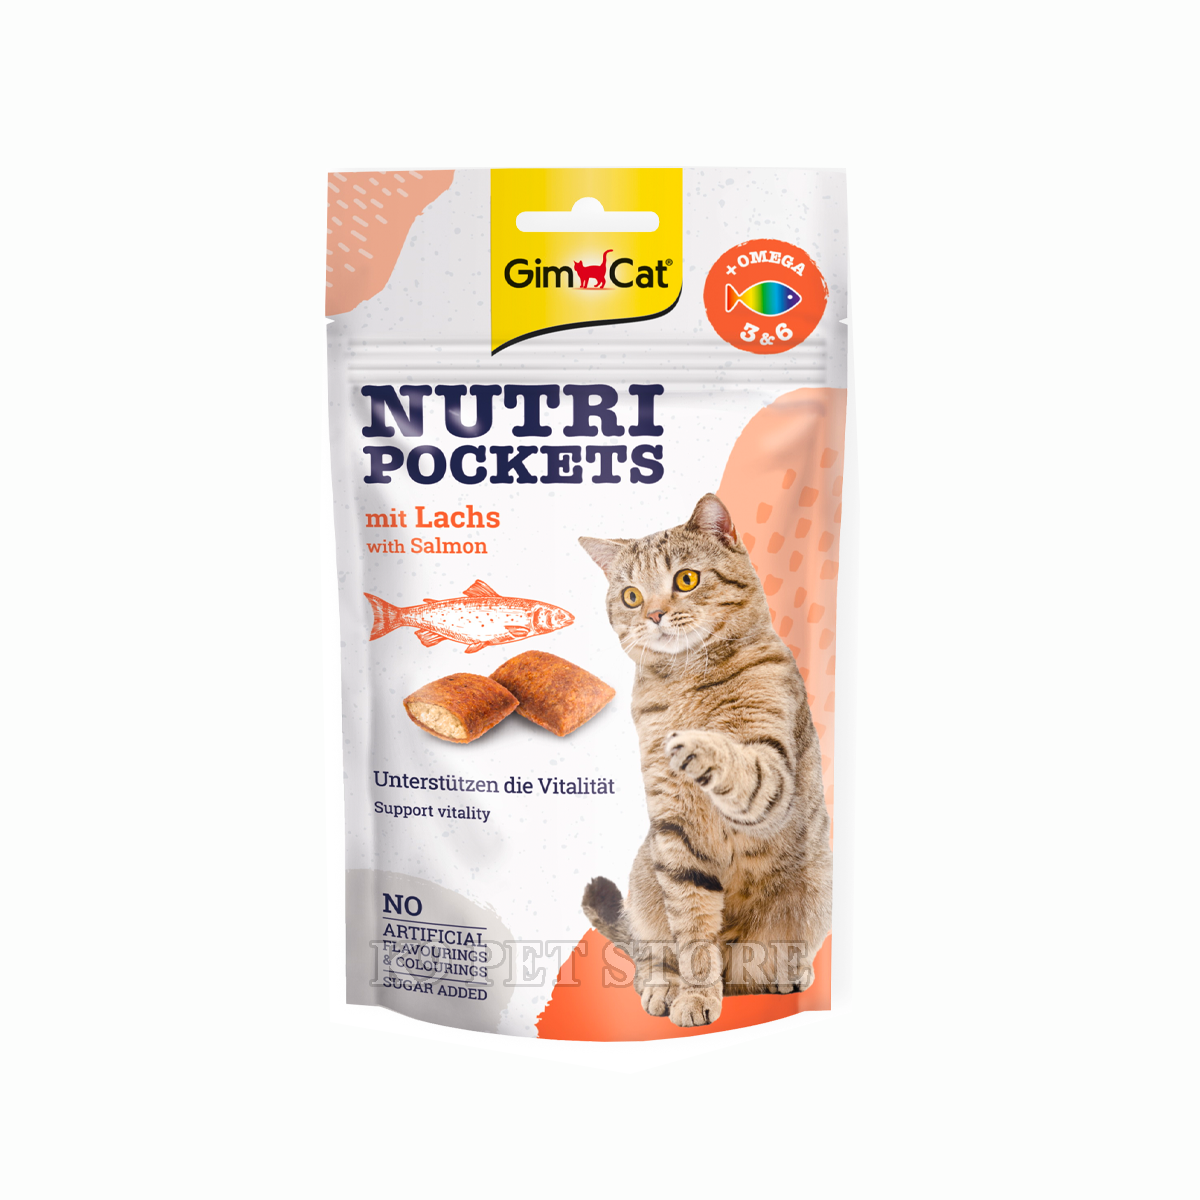 Snack mèo Gimcat Nutri Pockets Salmon 60g - bổ sung Omega 3-6 (vị cá hồi)